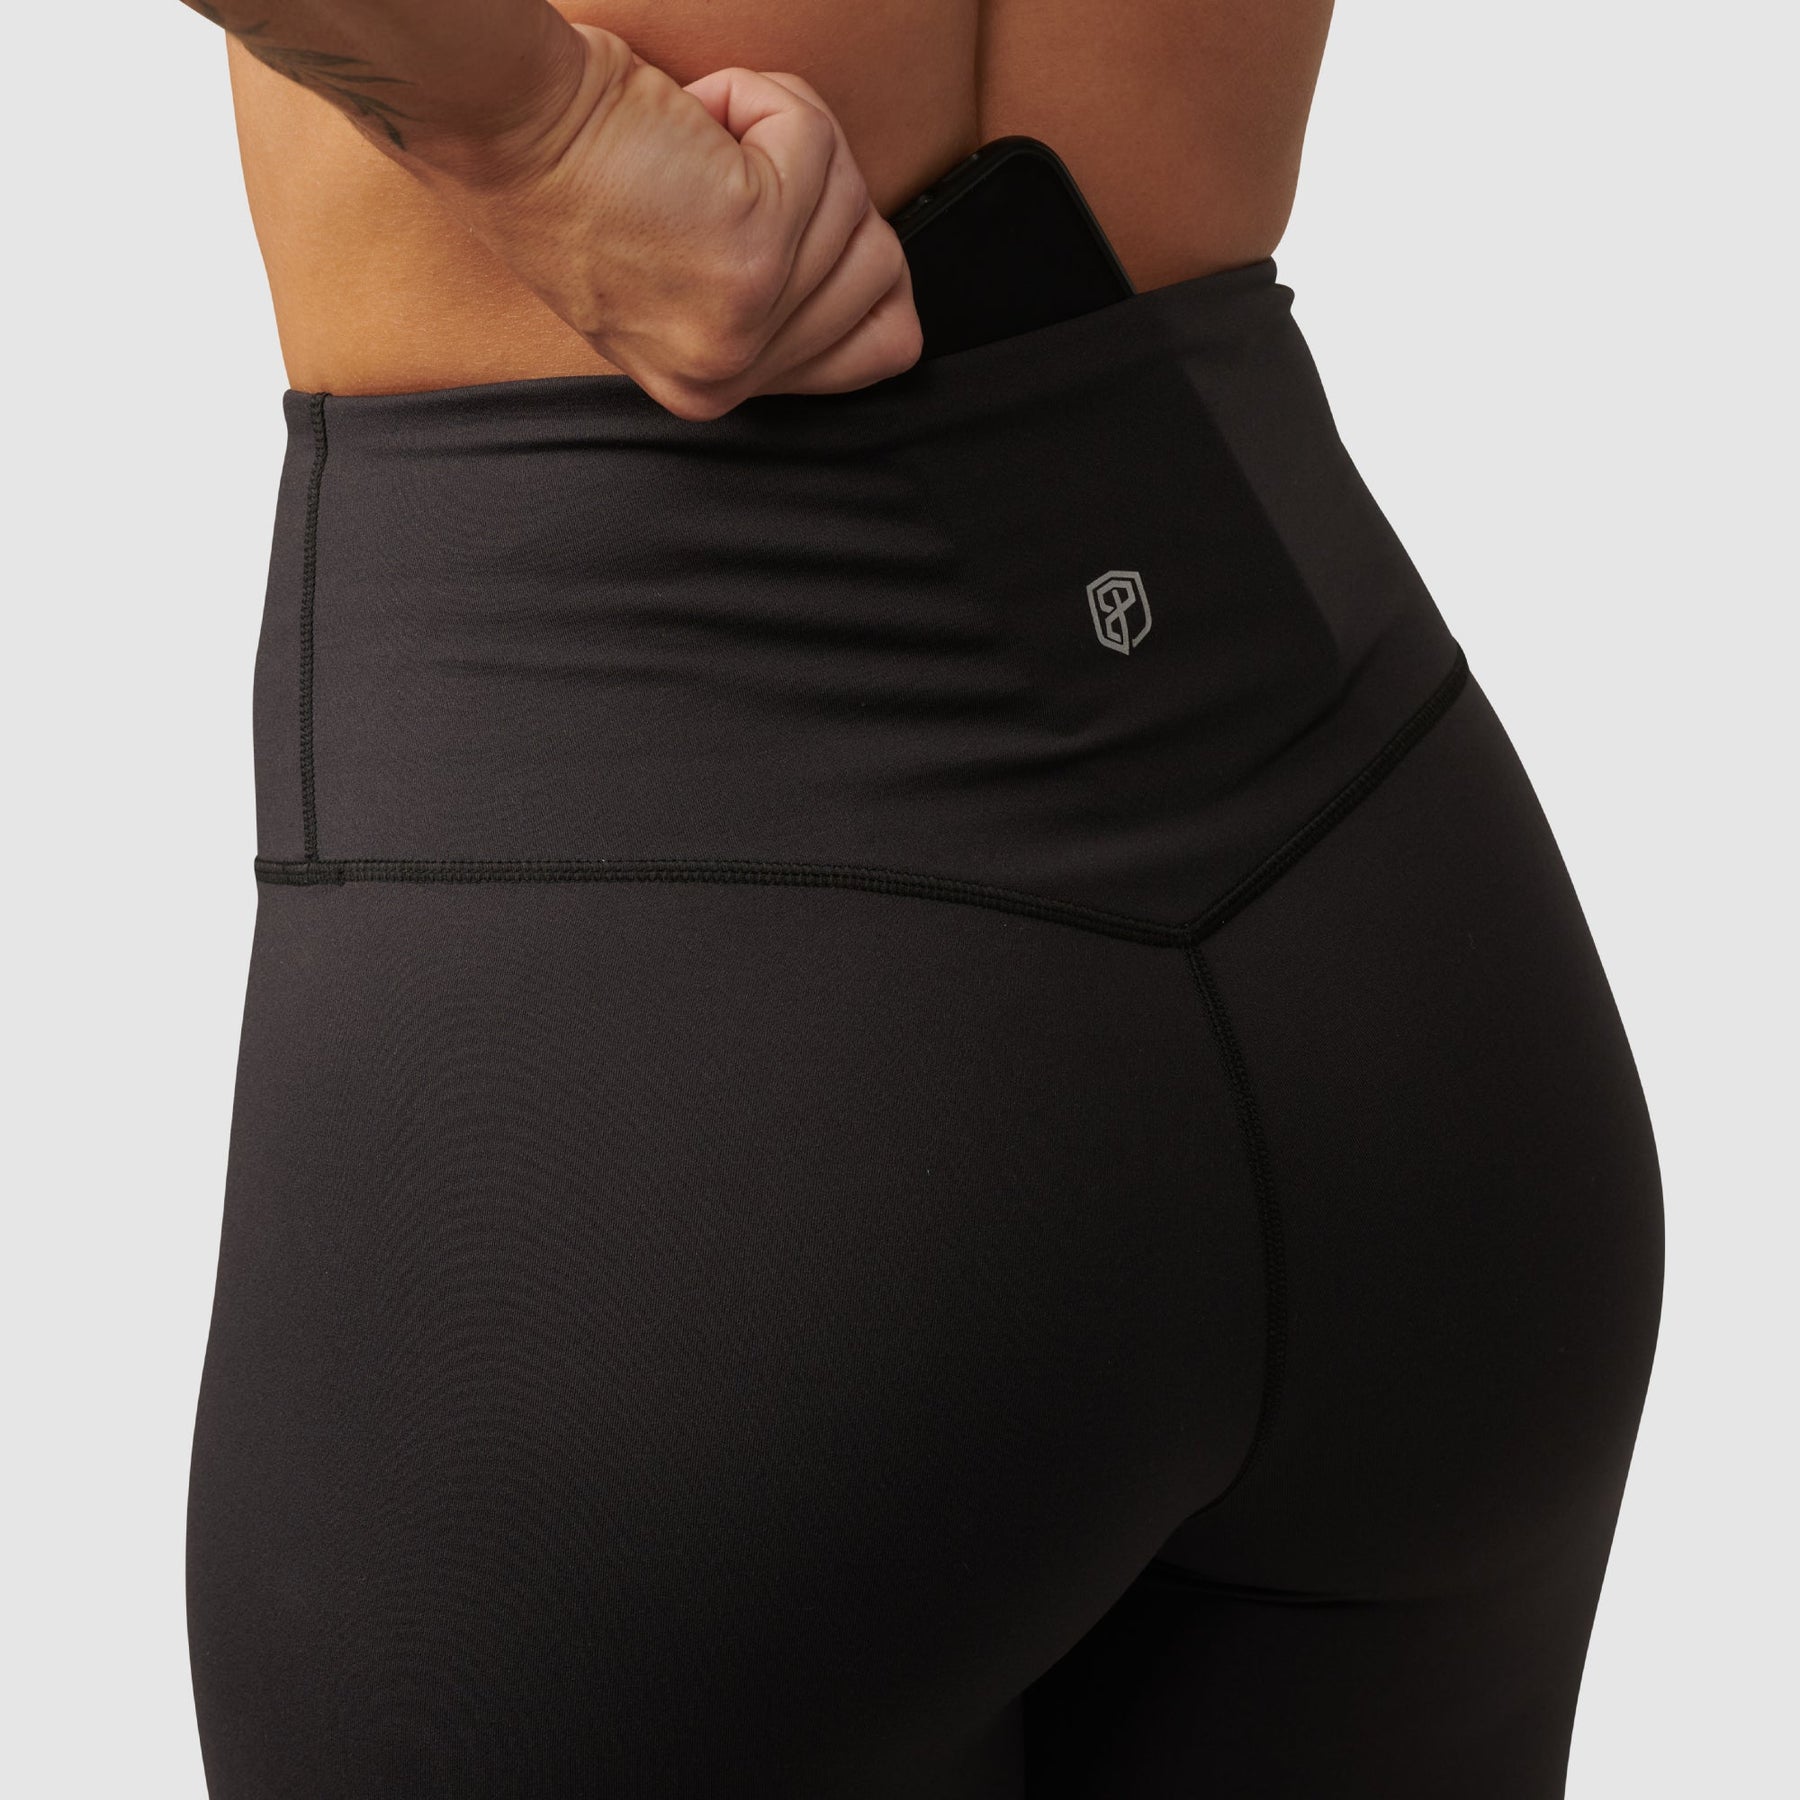  Side Pockets,Tall Womens Straight Leg Yoga Pants Slim Fit Workout  Pants,35,Black,L